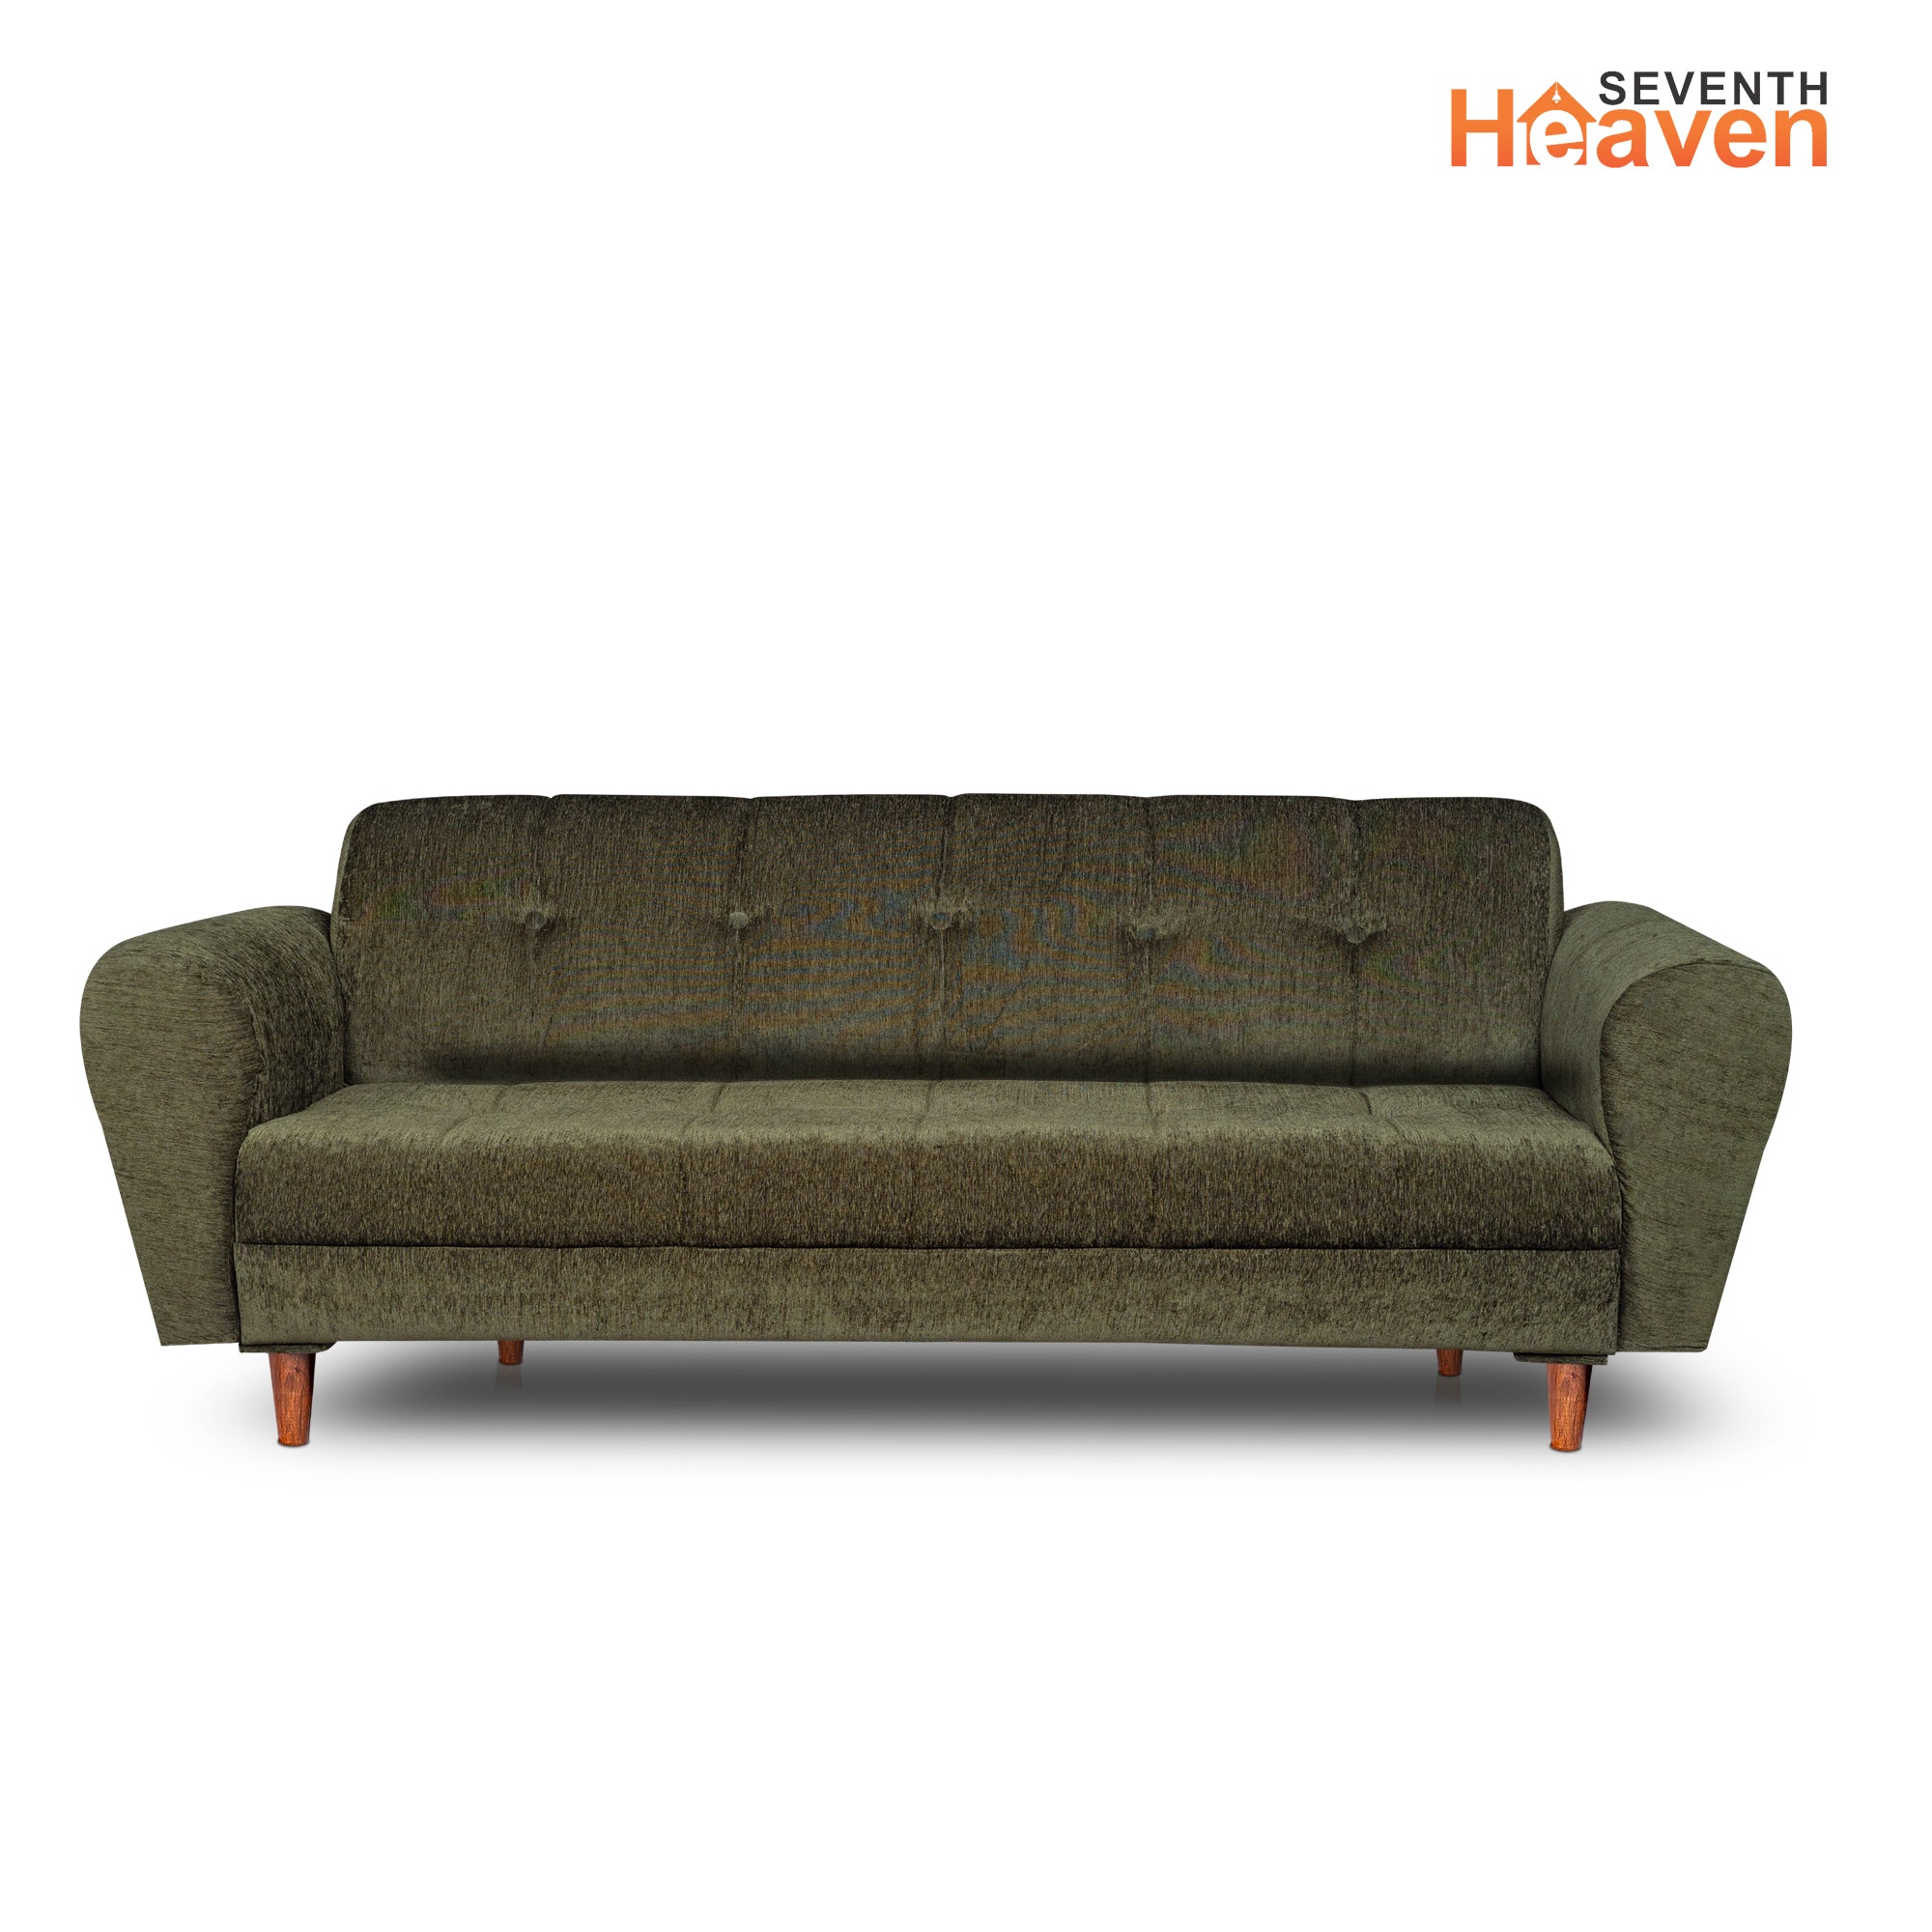 Seventh Heaven Milan 4 Seater Sofa with Ottoman, Chenille Molfino Fabric: 3 Year Warranty Fabric 4 Seater Sofa  (Finish Color - Green, DIY(Do-It-Yourself))